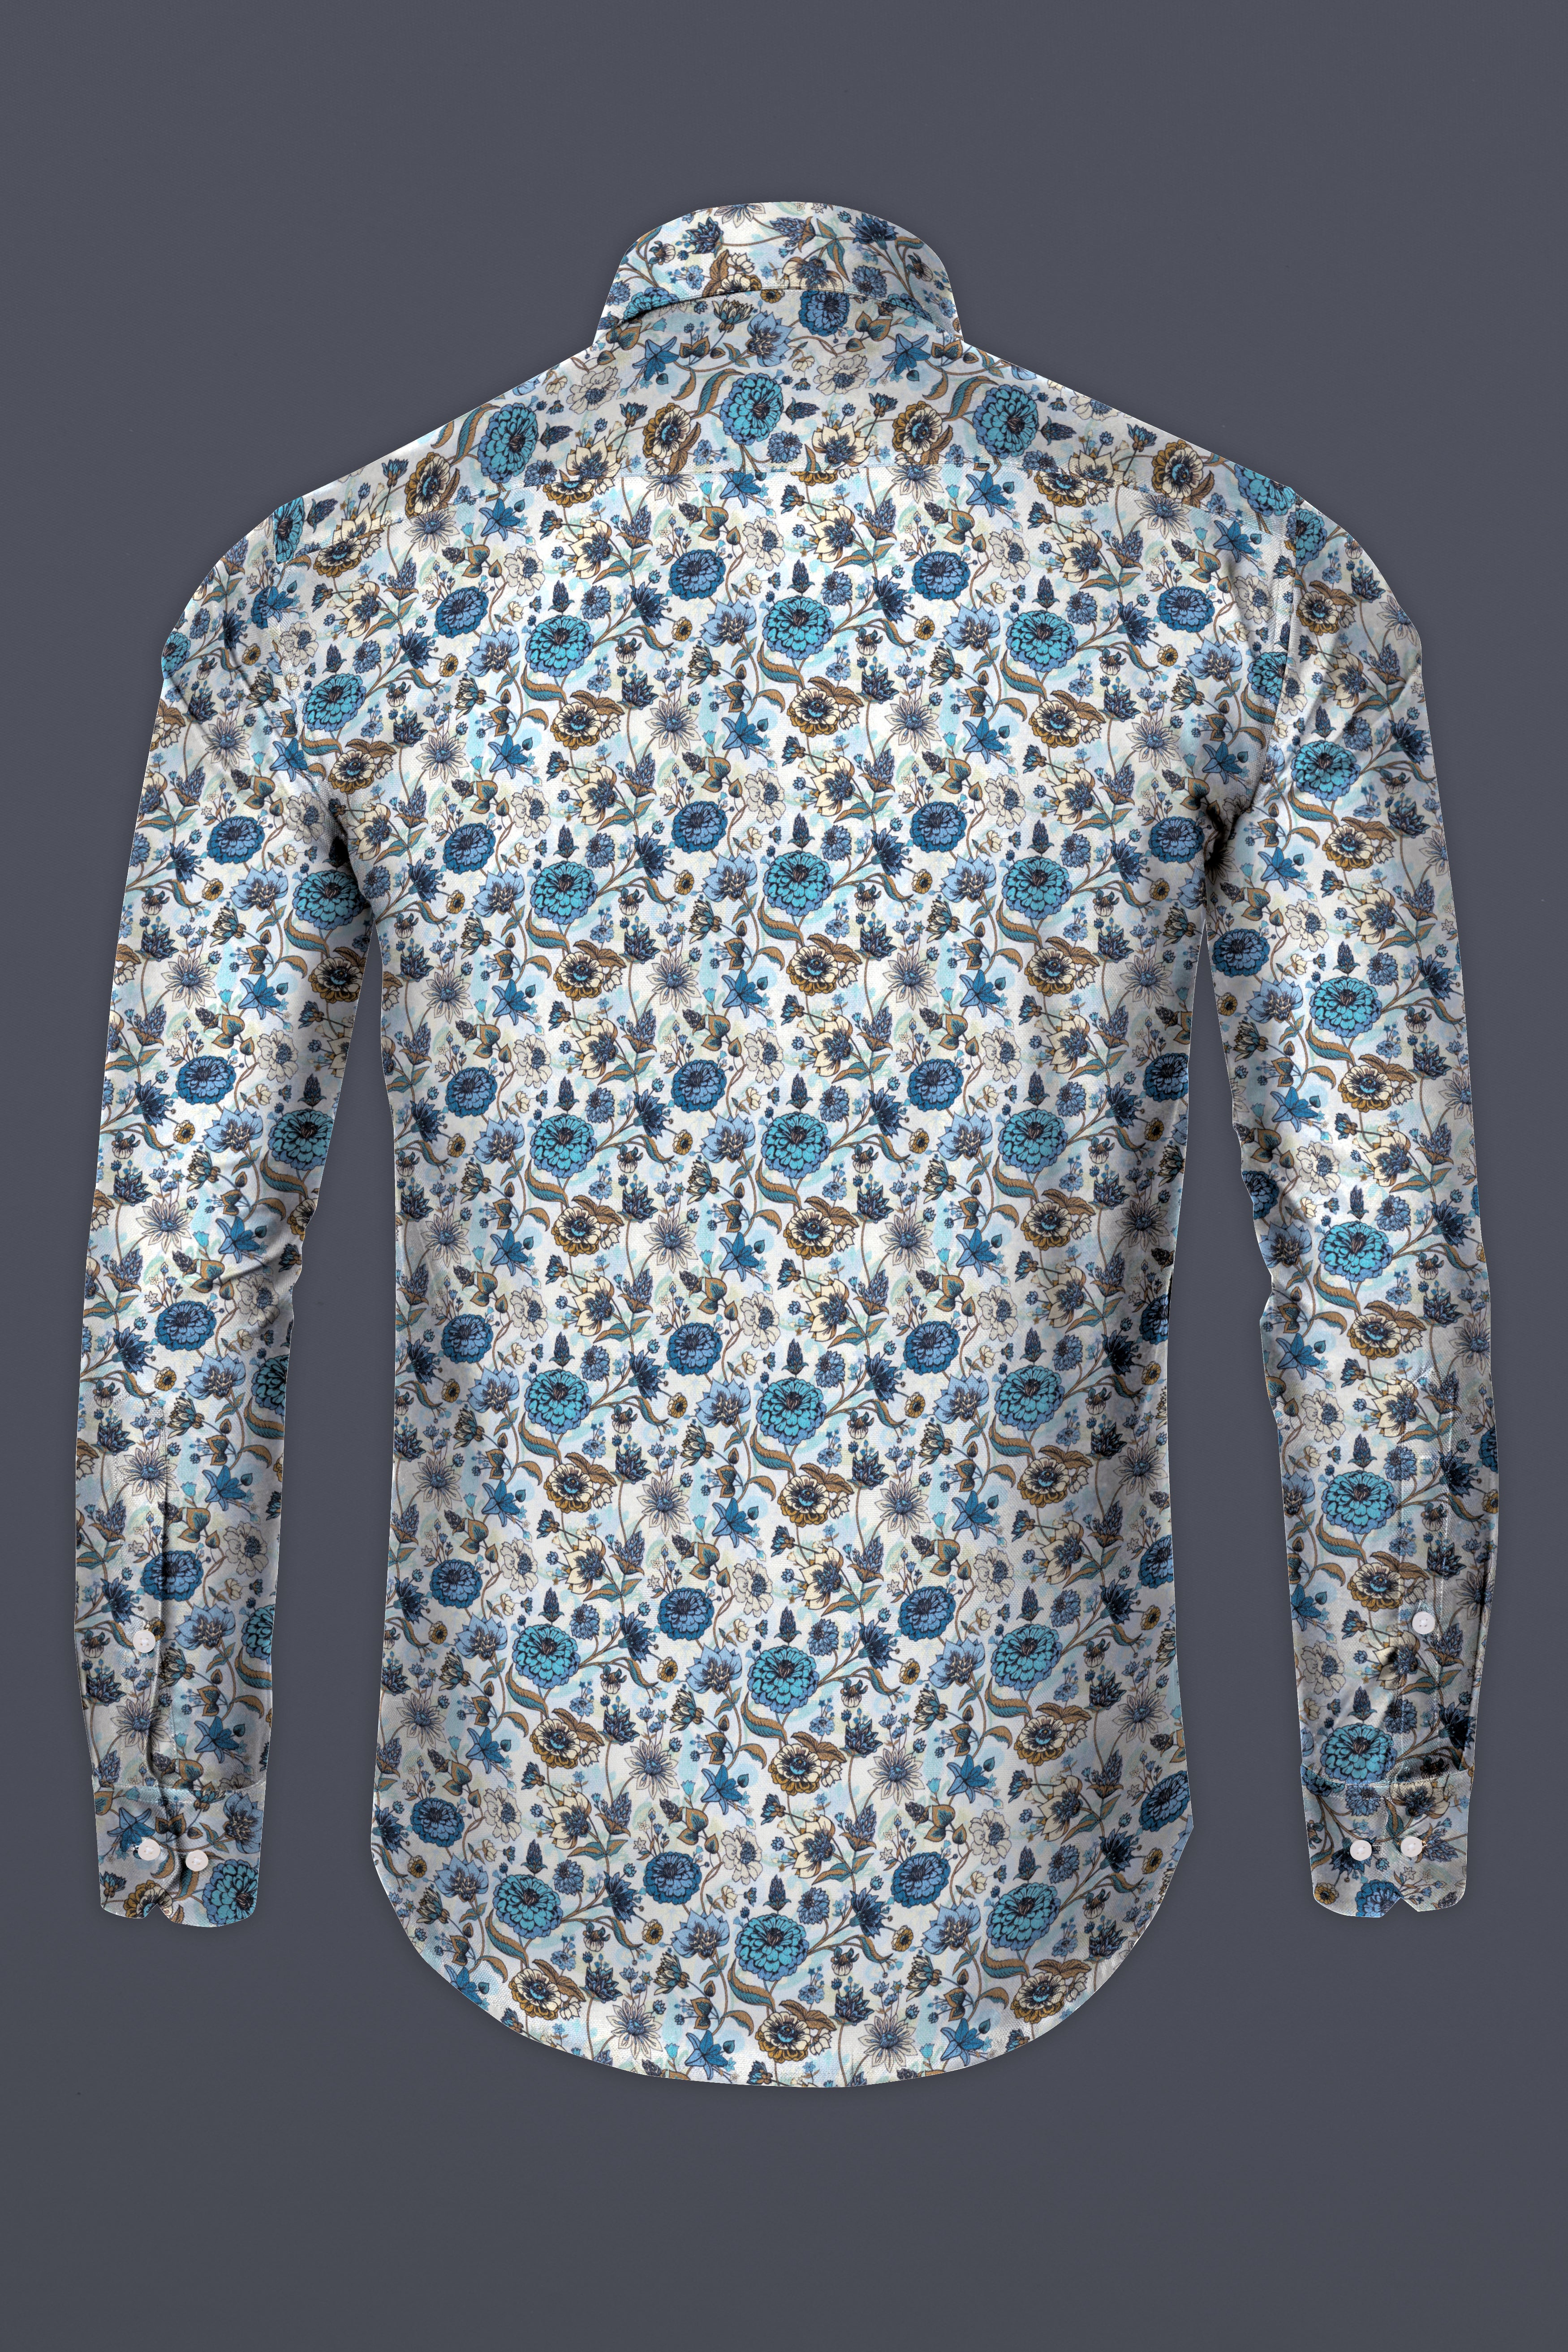 Swizzle Cream Blue Flowers Printed Super Soft Premium Cotton Shirt